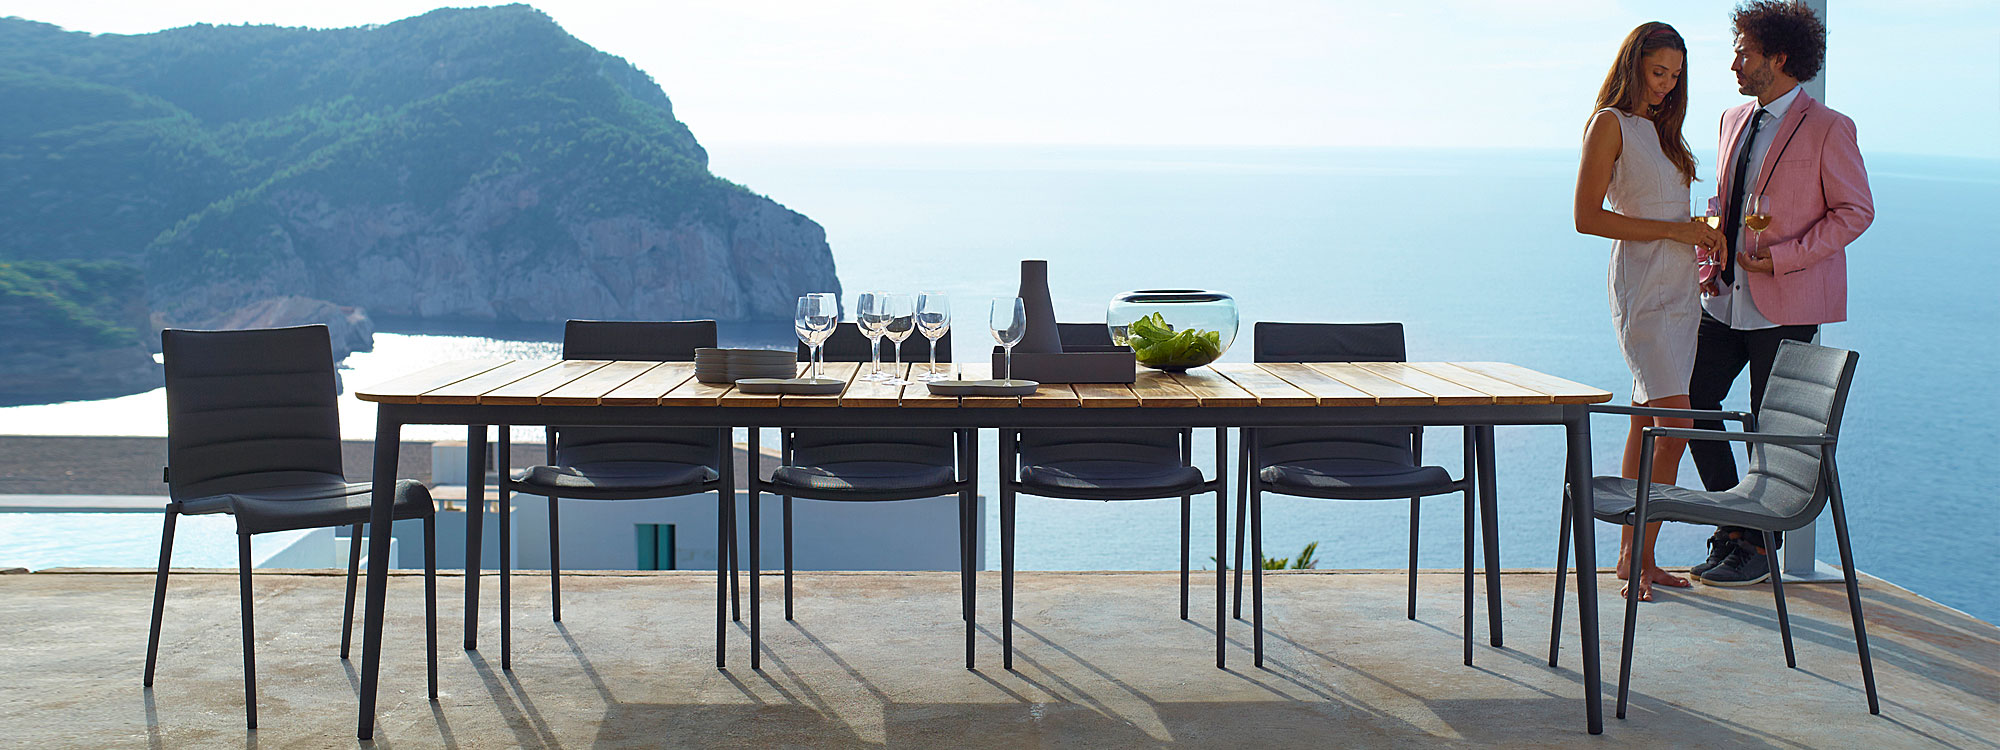 Core modern garden dining set is a range of designer garden furniture in all-weather garden furniture materials by Cane-line